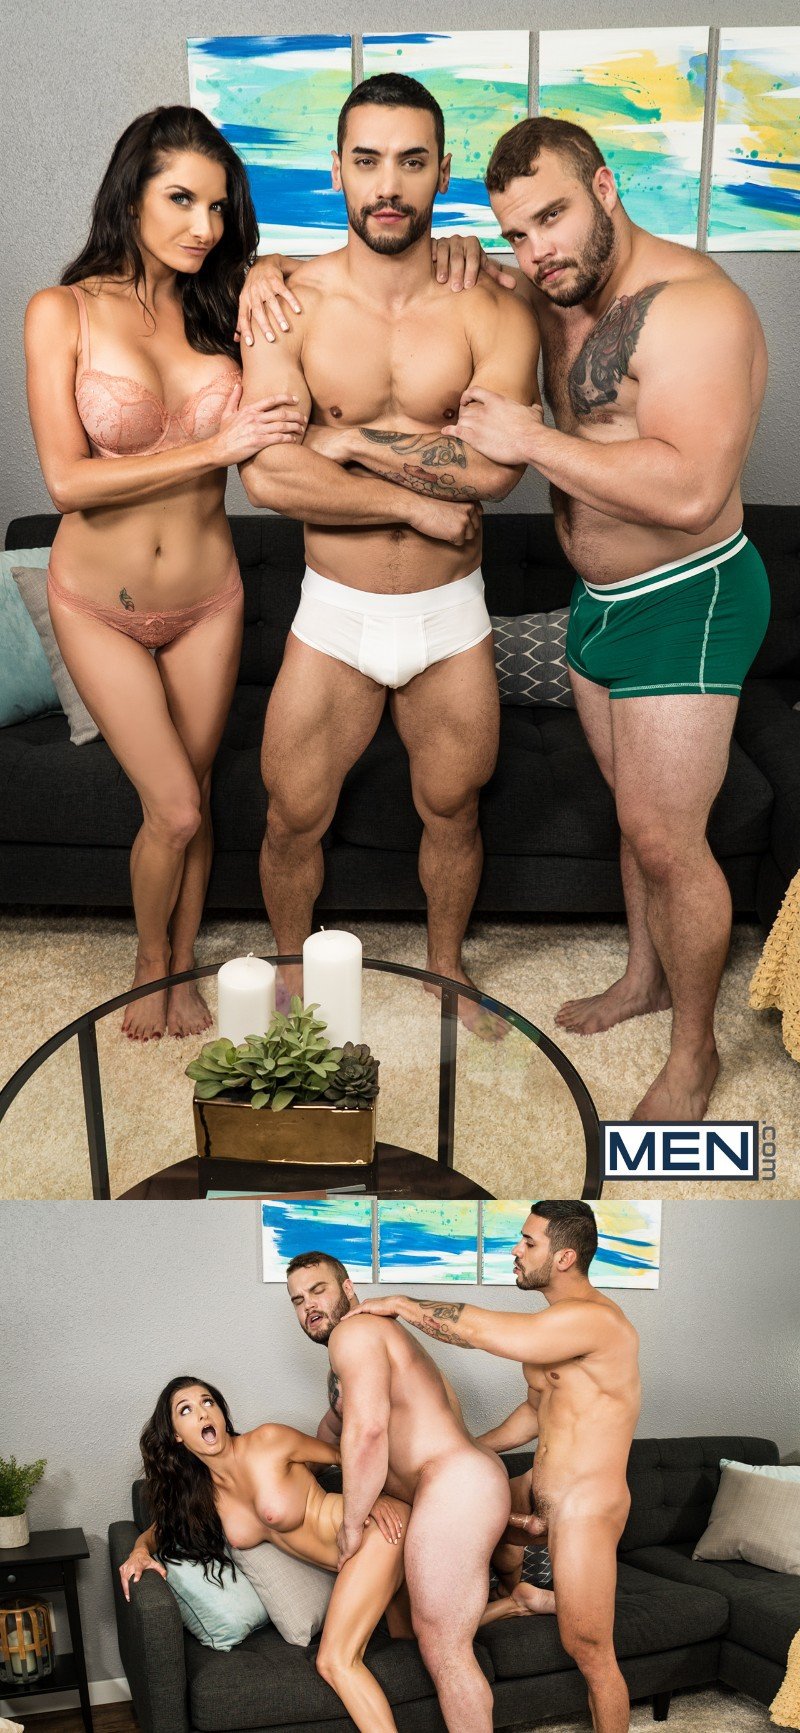 Bisexual Men - MEN.com Releases Its First Bisexual Scene & Members Hate It! - GayDemon